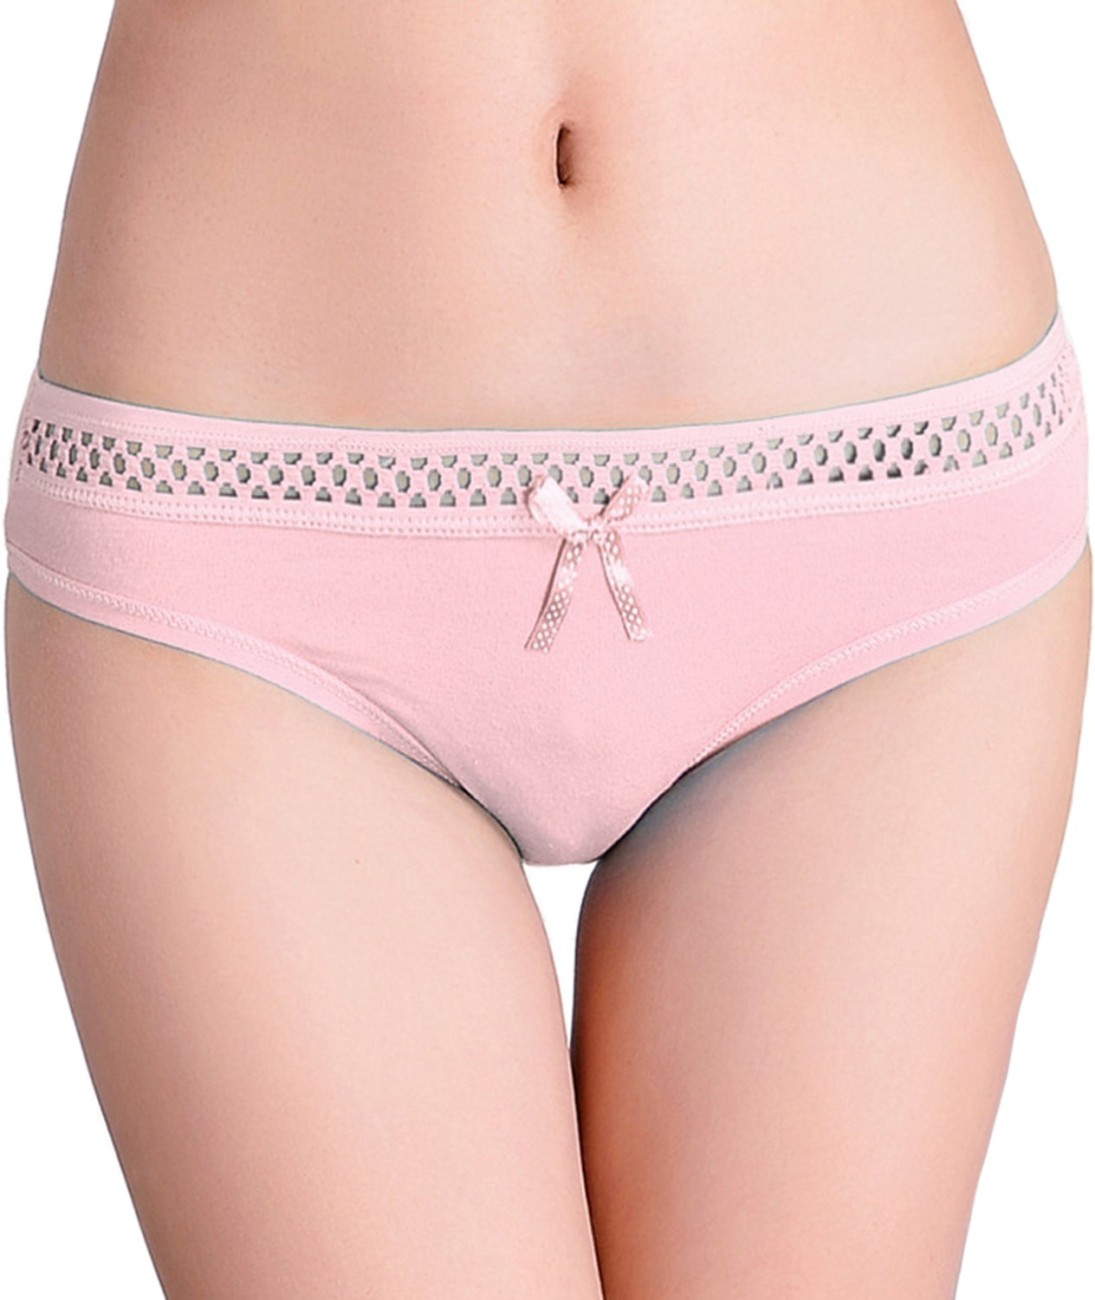 Buy Best Women Thong Pink Panty - Buy Buy Best Women Thong Pink